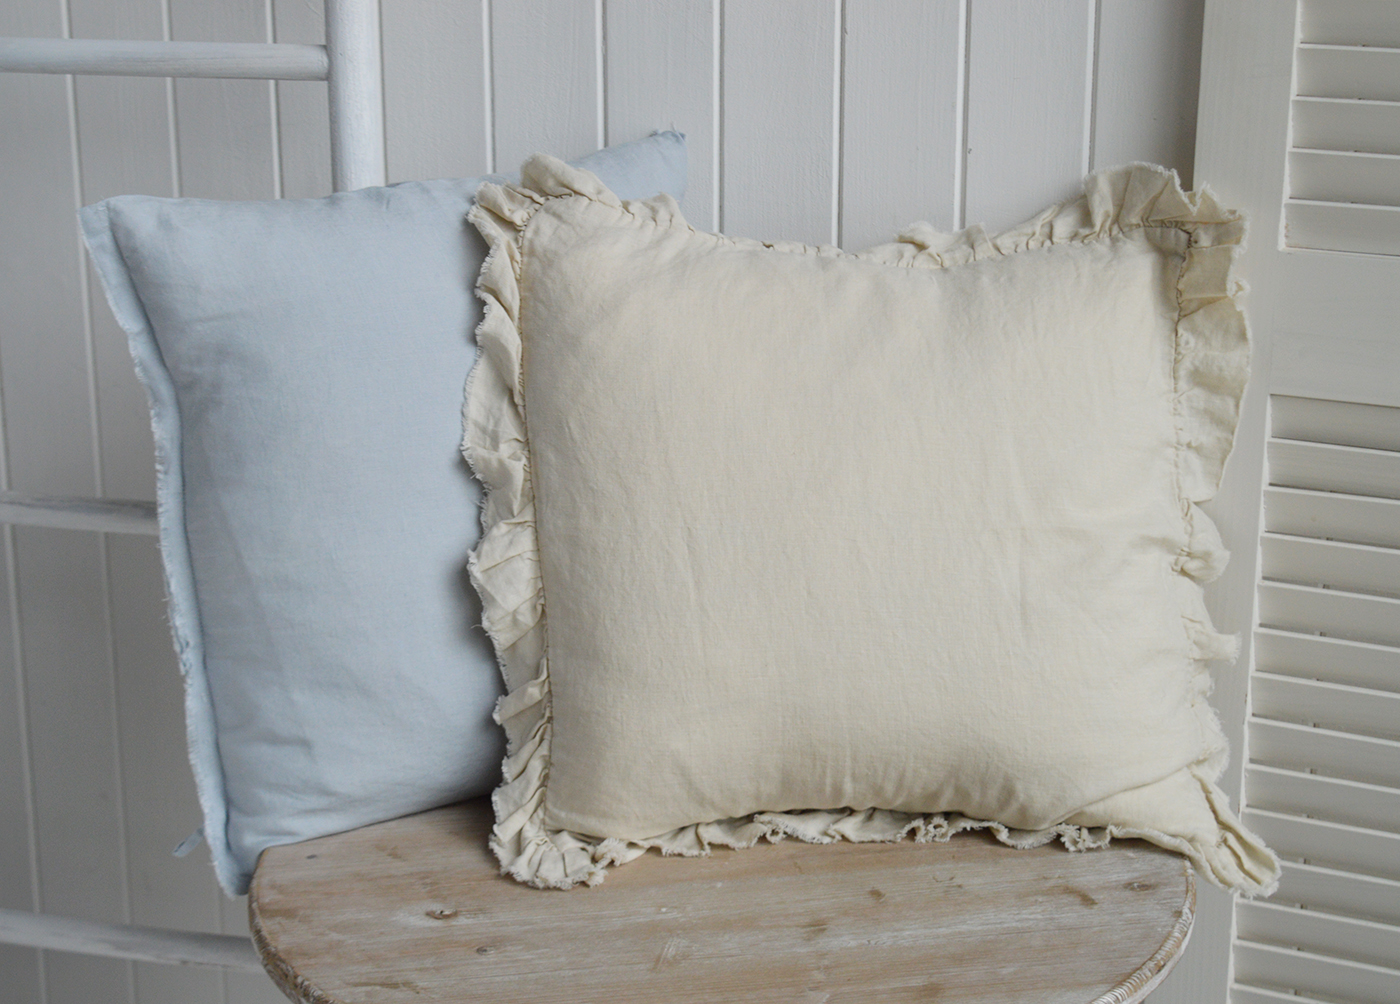 New England cushions and soft furnishings. Hamilton 100% Linen Cushion Covers for coastal, beach house and modern farmhouse interiors - dusty blue and cream